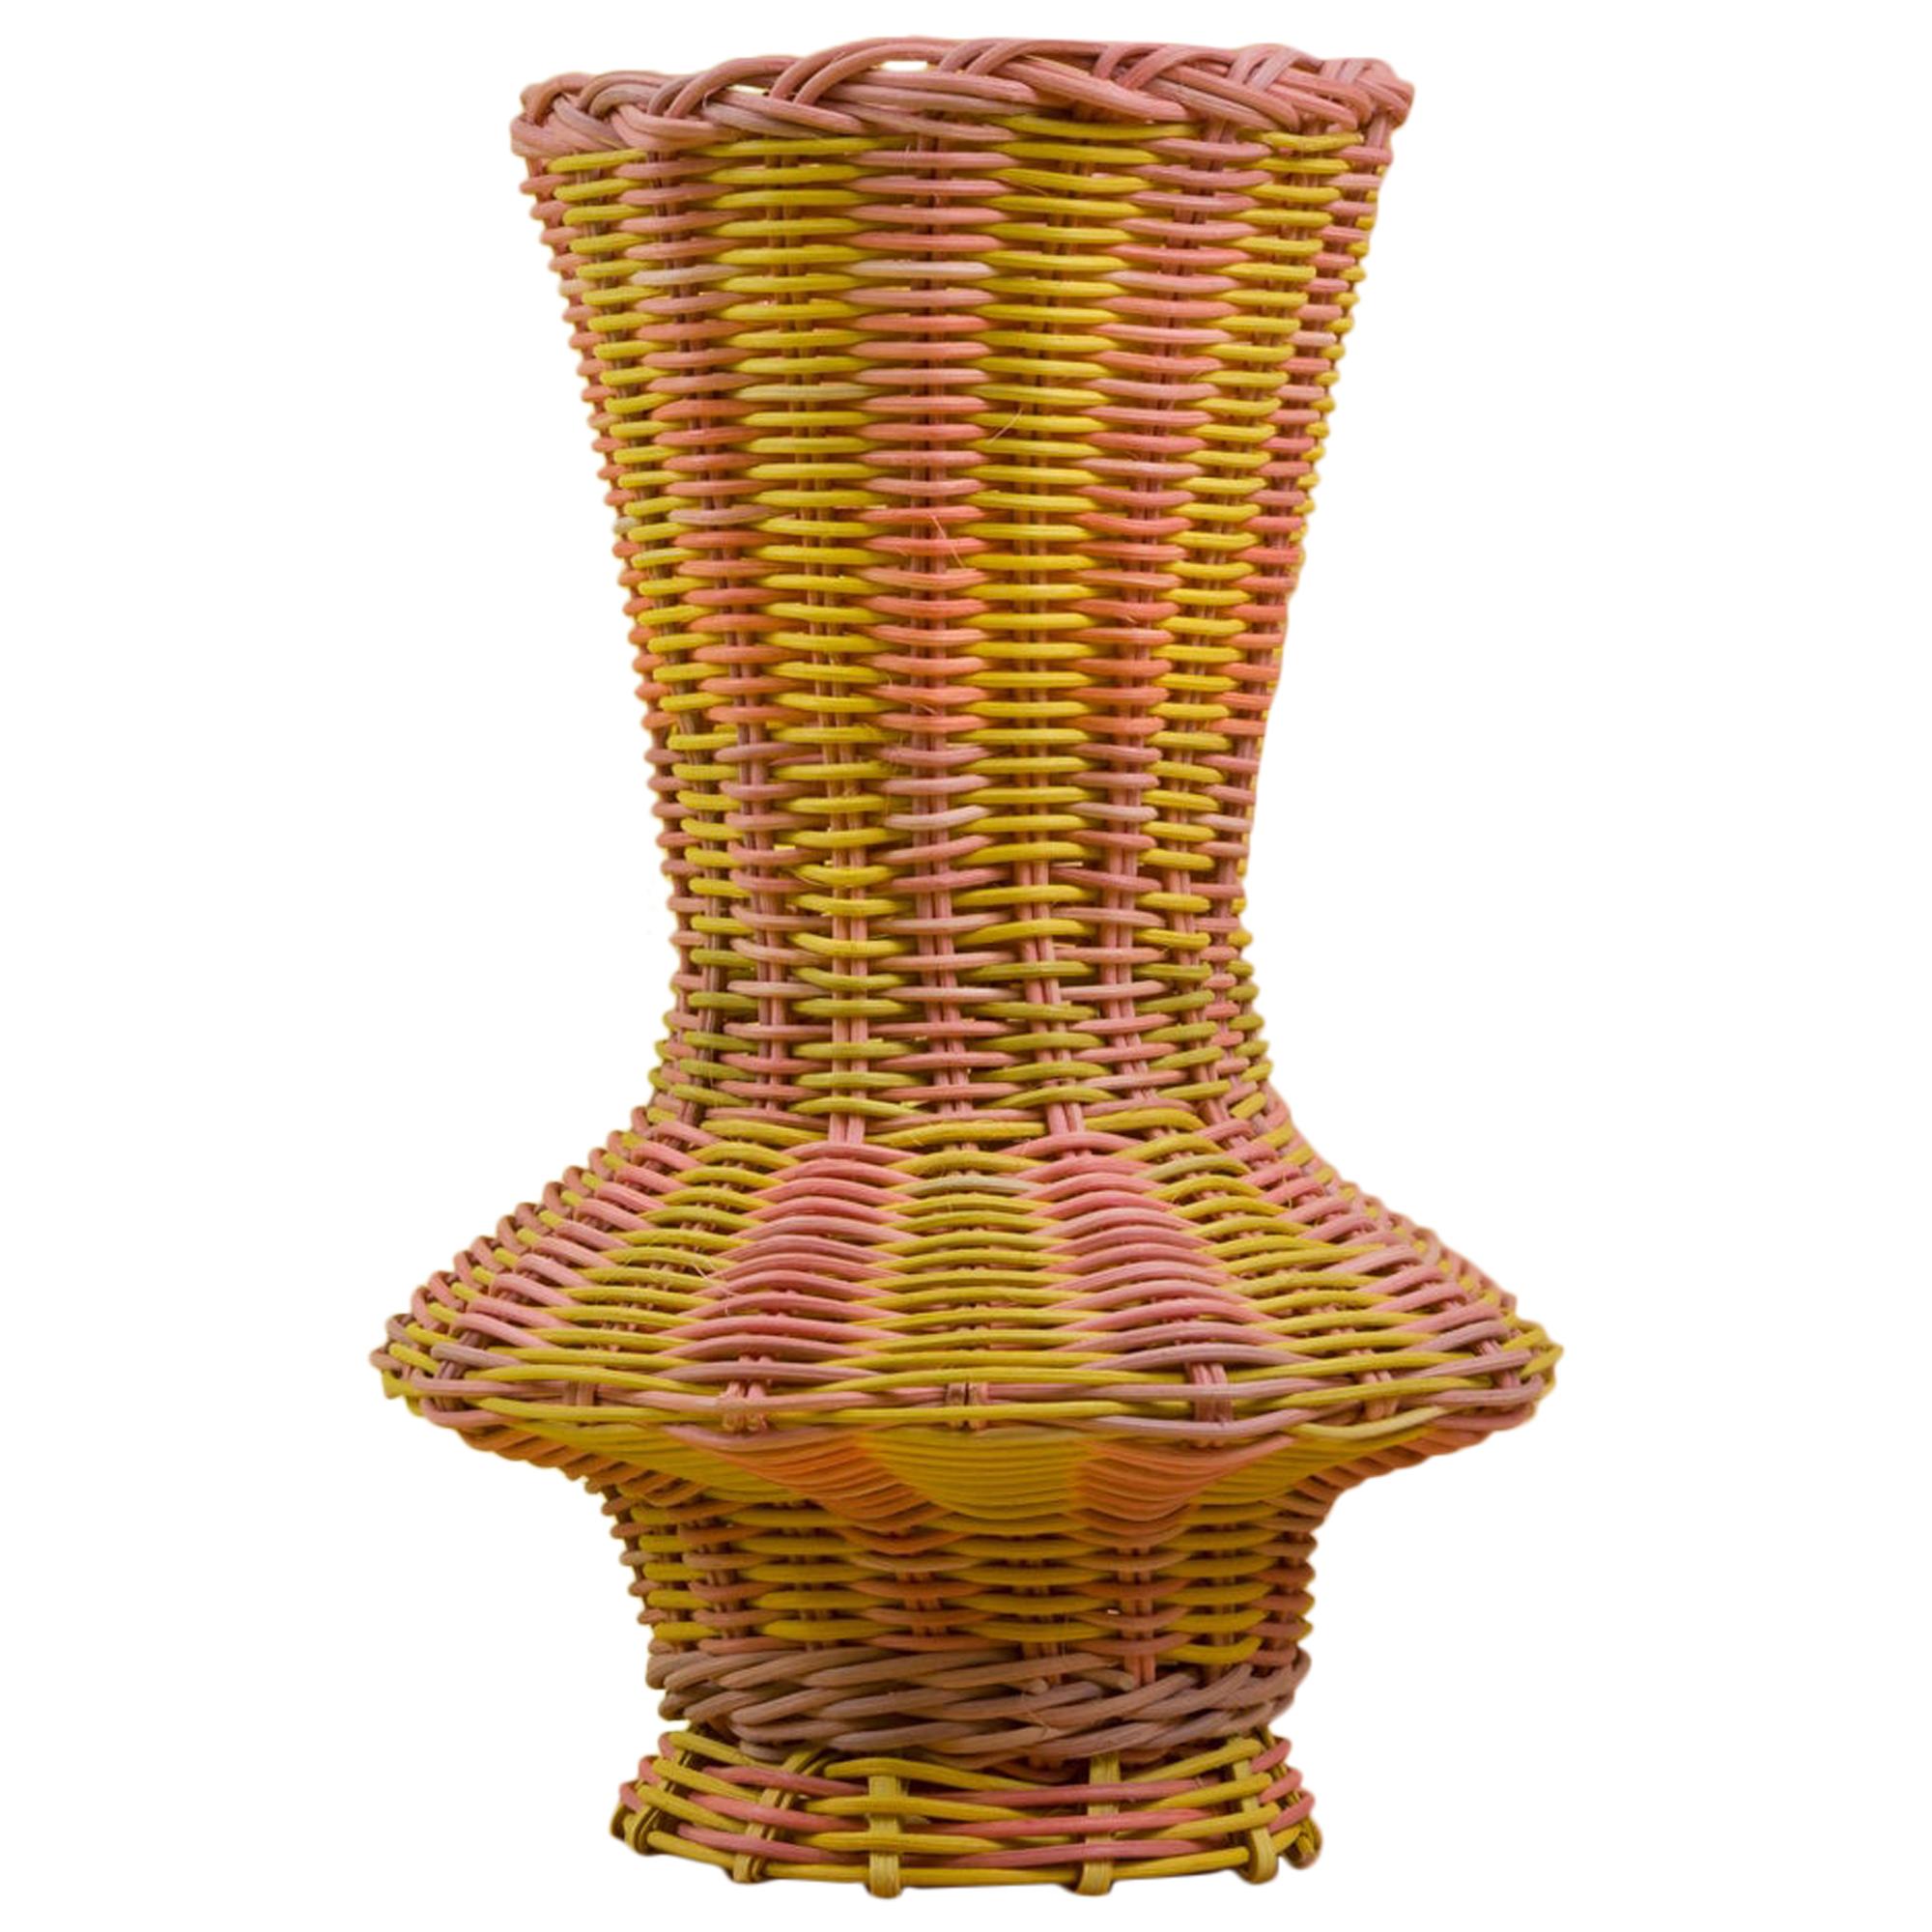 Rhombus Vase Woven in Lemon and Salmon by Studio Herron